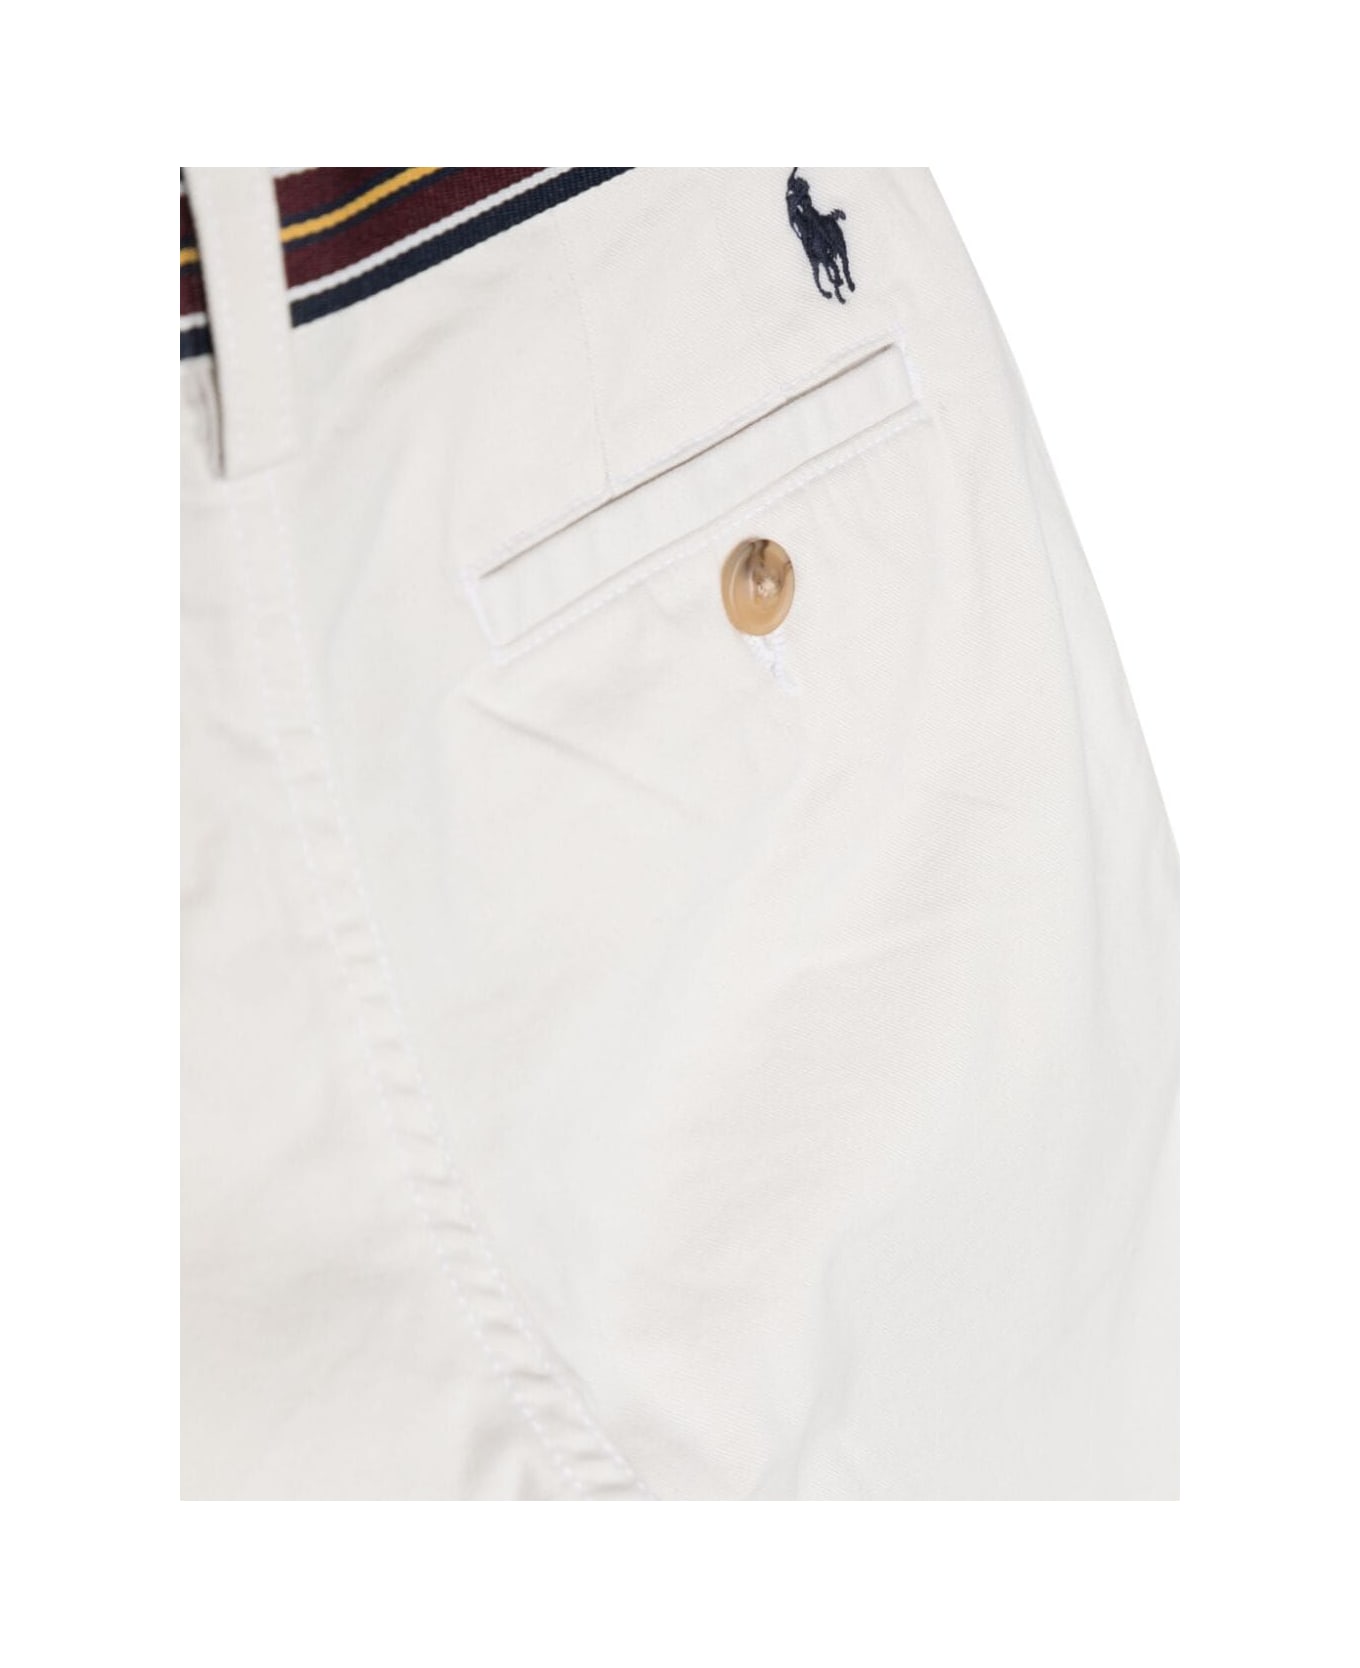 Polo Ralph Lauren Bedford Shrt Shorts Flat Front - Deckwash White